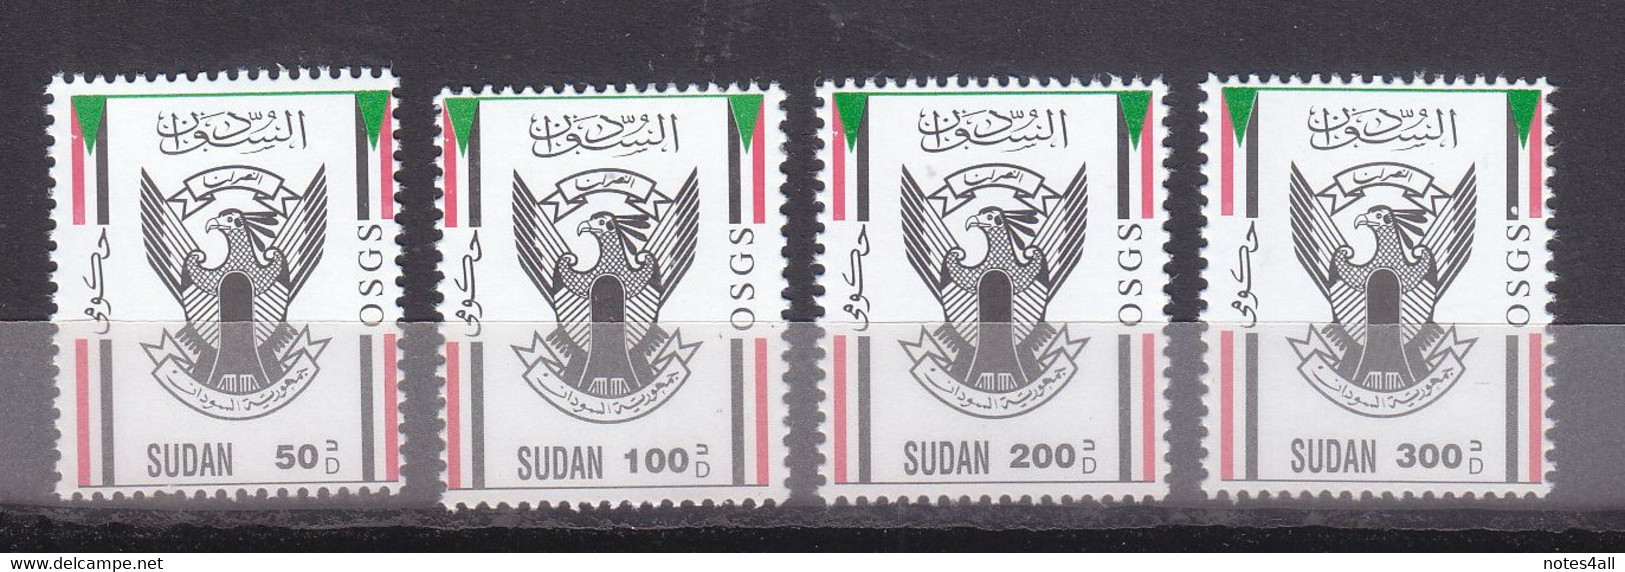 Stamps SUDAN 2003 SC O113 O116 OFFICIAL LOT X10 MNH SETS # 54 - Sudan (1954-...)